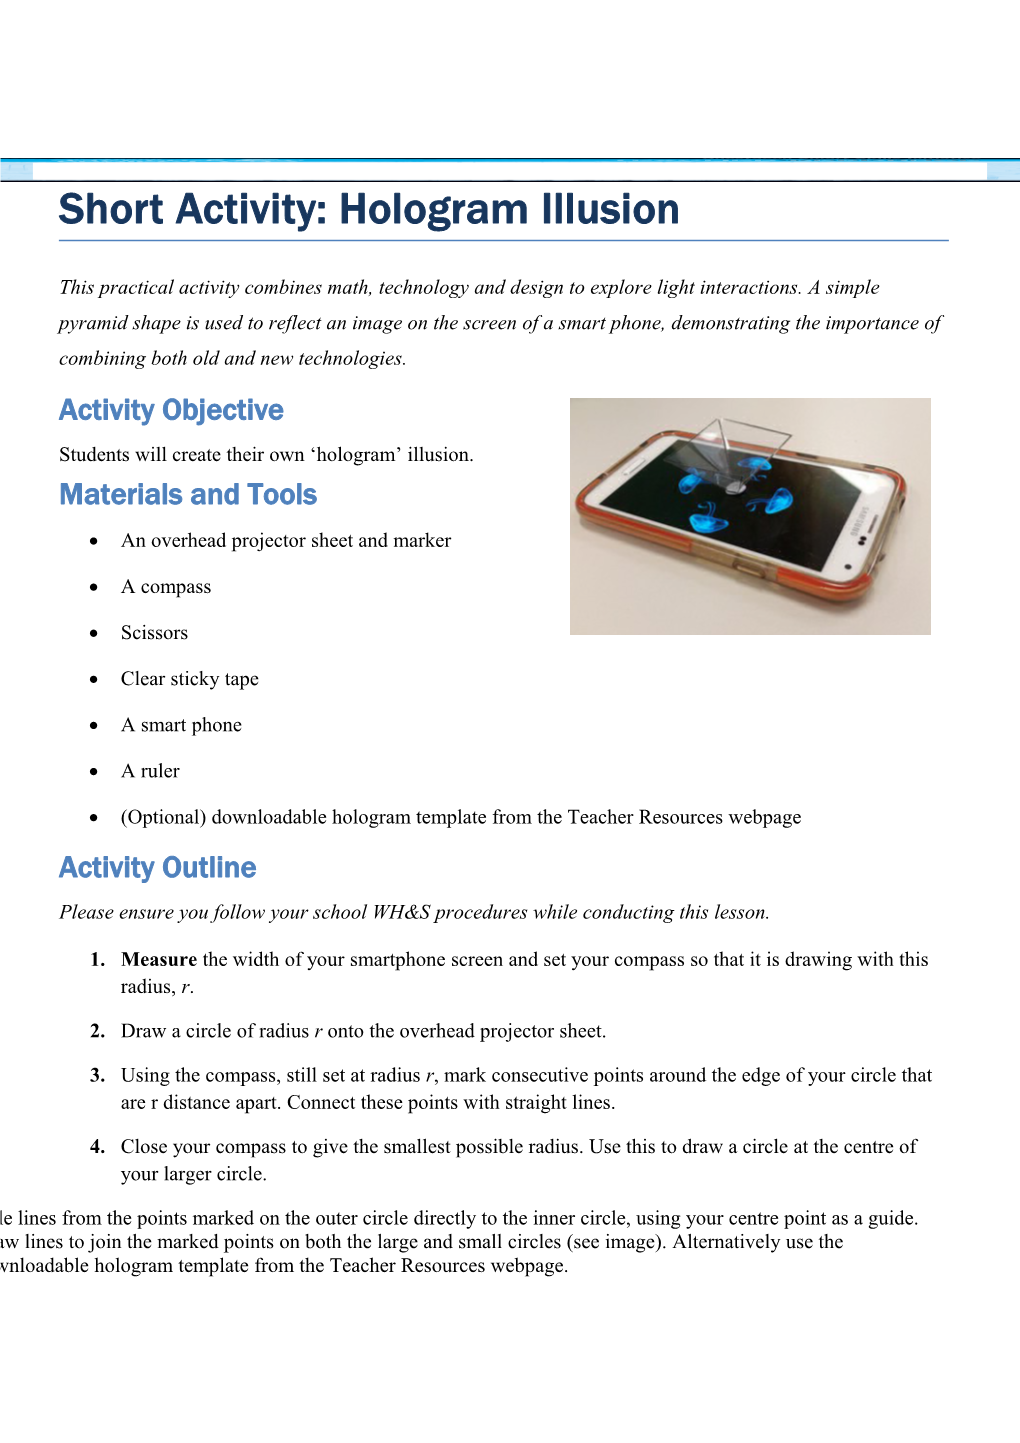 Short Activity: Hologram Illusion